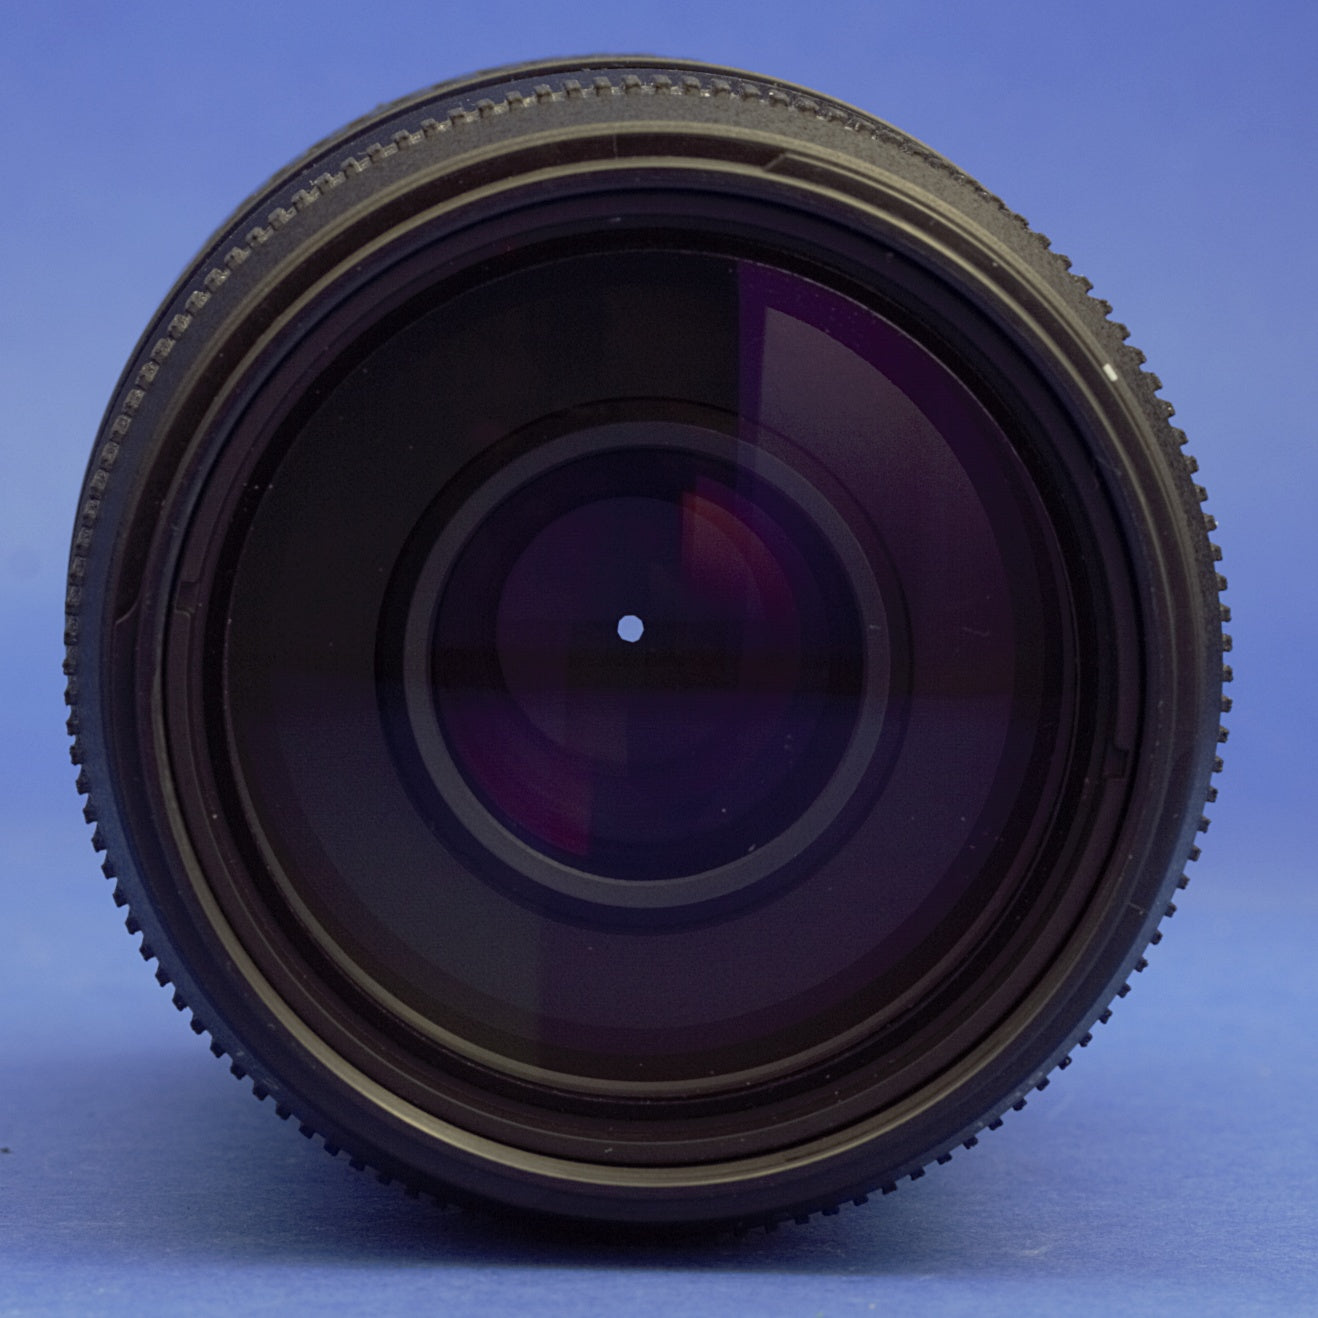 Nikon AF-D Mount Tamron 70-300mm 4-5.6 LD Di Tele-Macro Lens Near Mint Condition